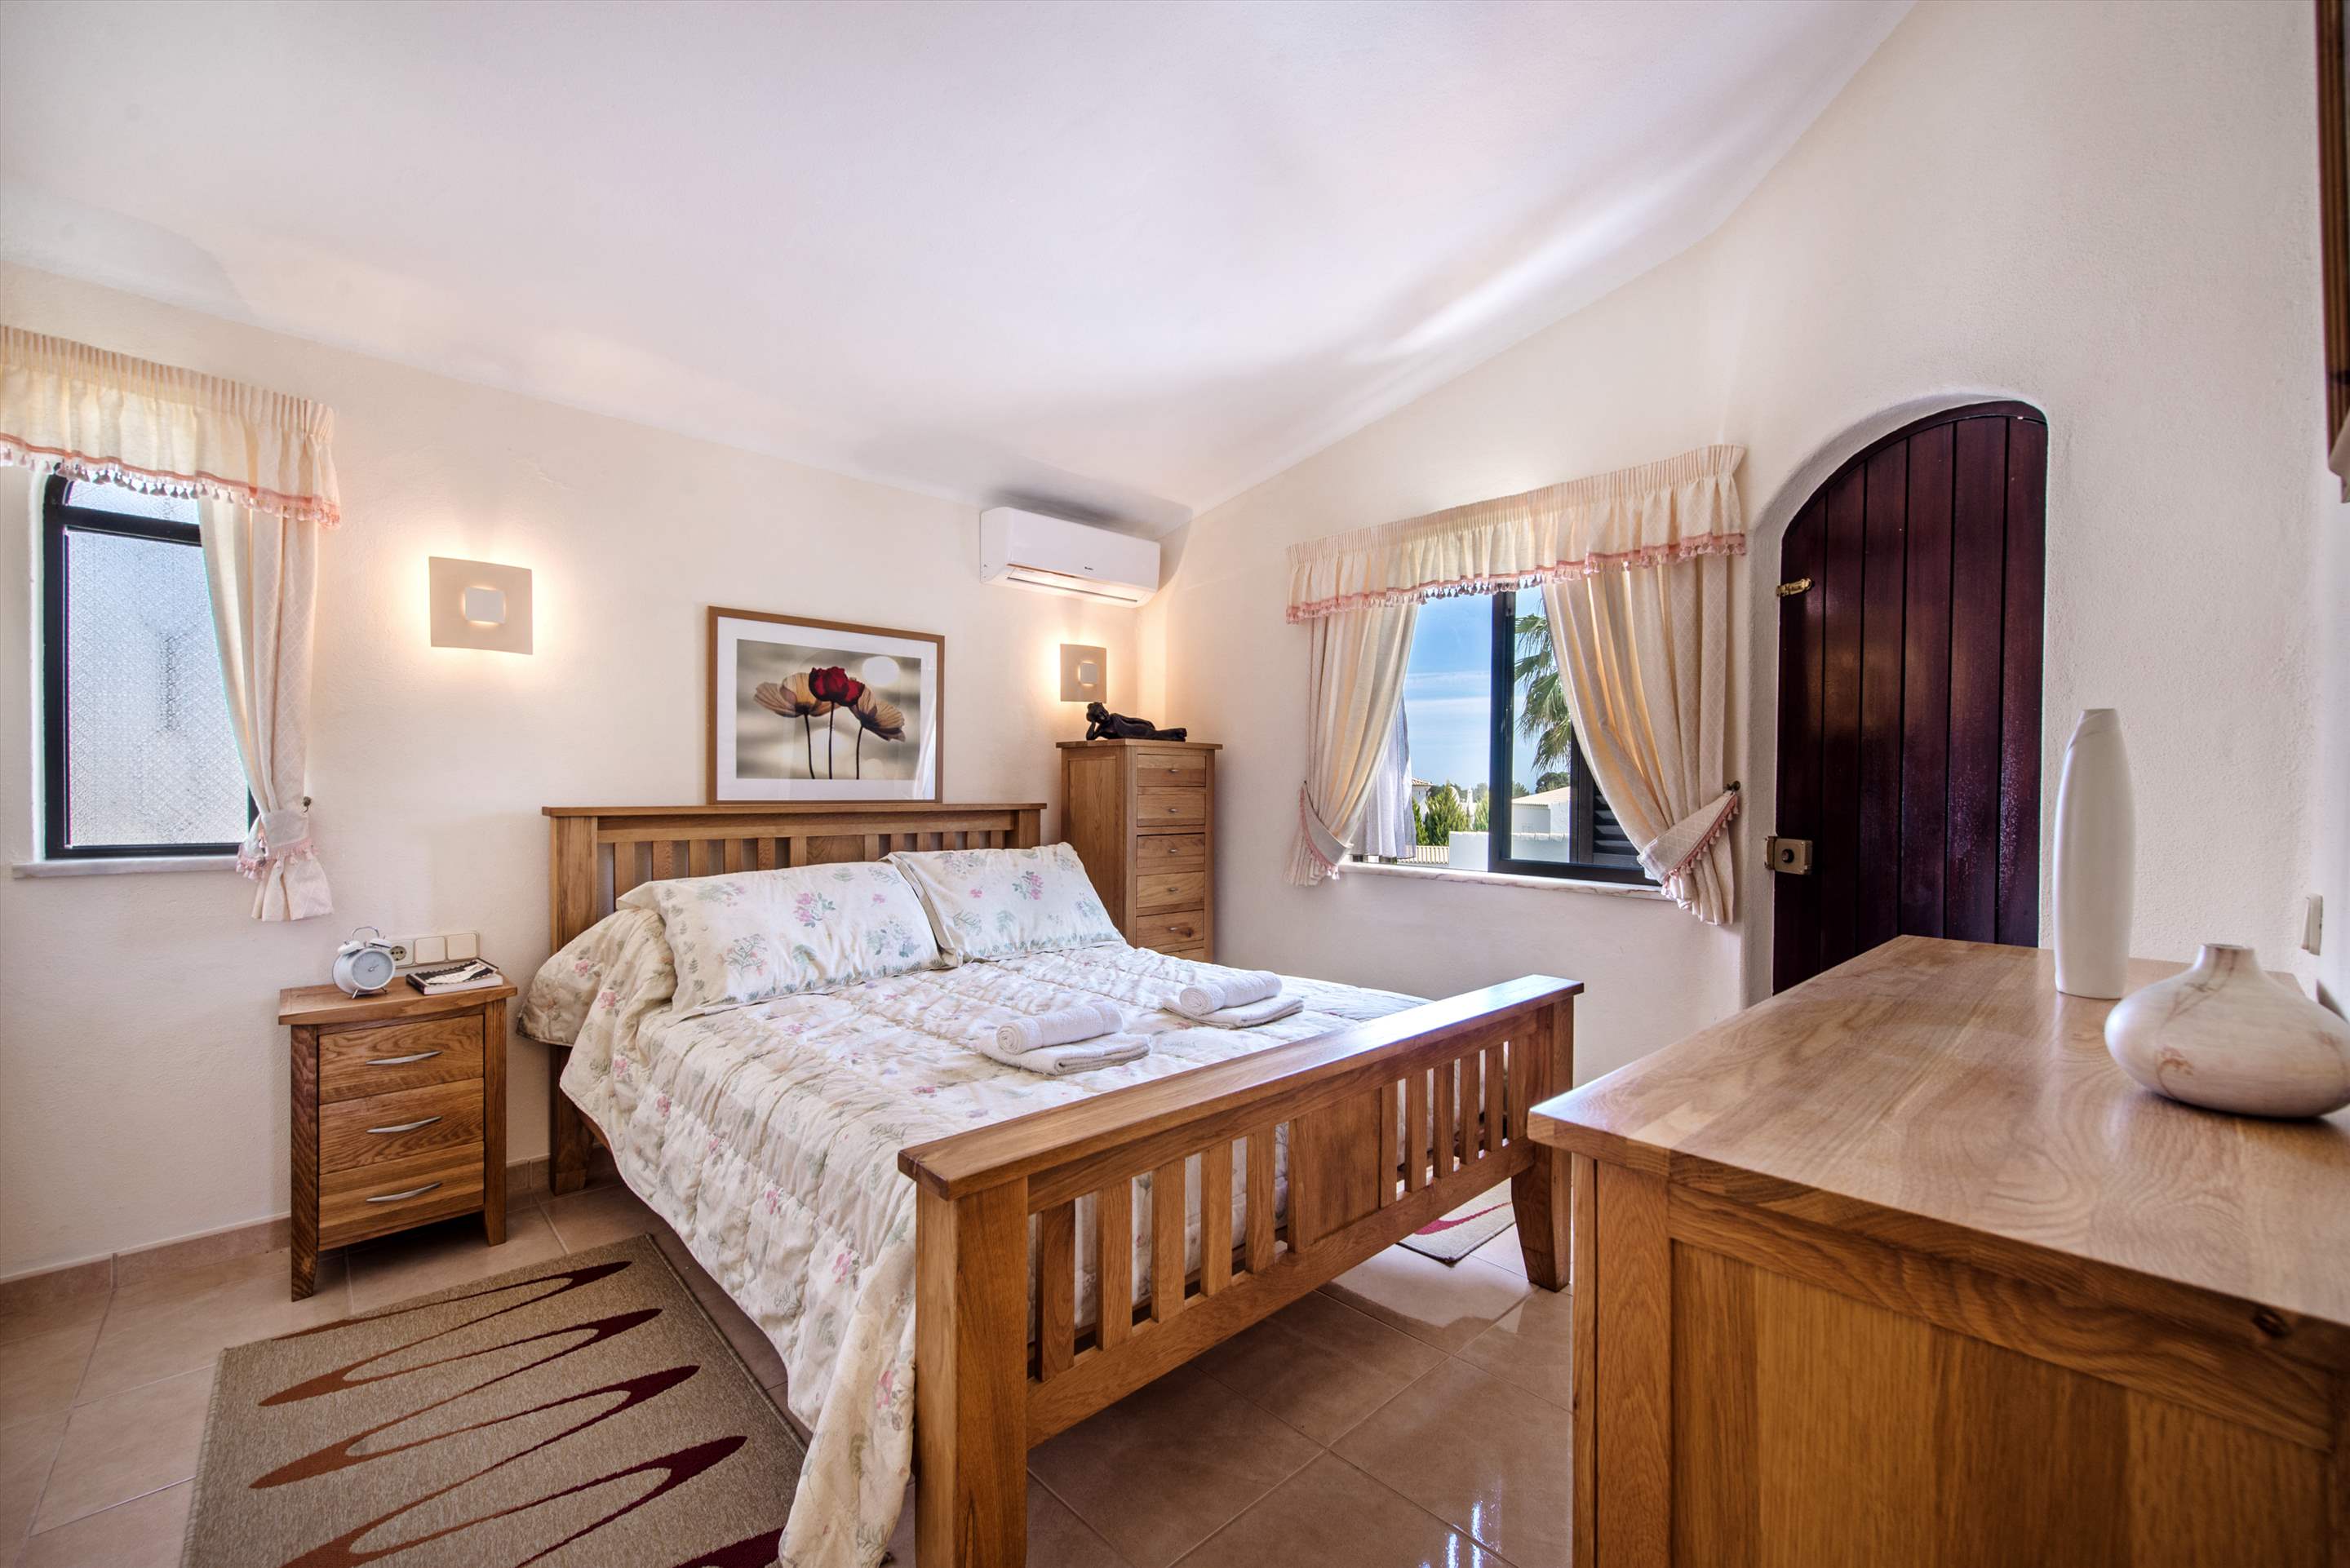 Casa Amizade, 3 bedroom villa in Gale, Vale da Parra and Guia, Algarve Photo #13